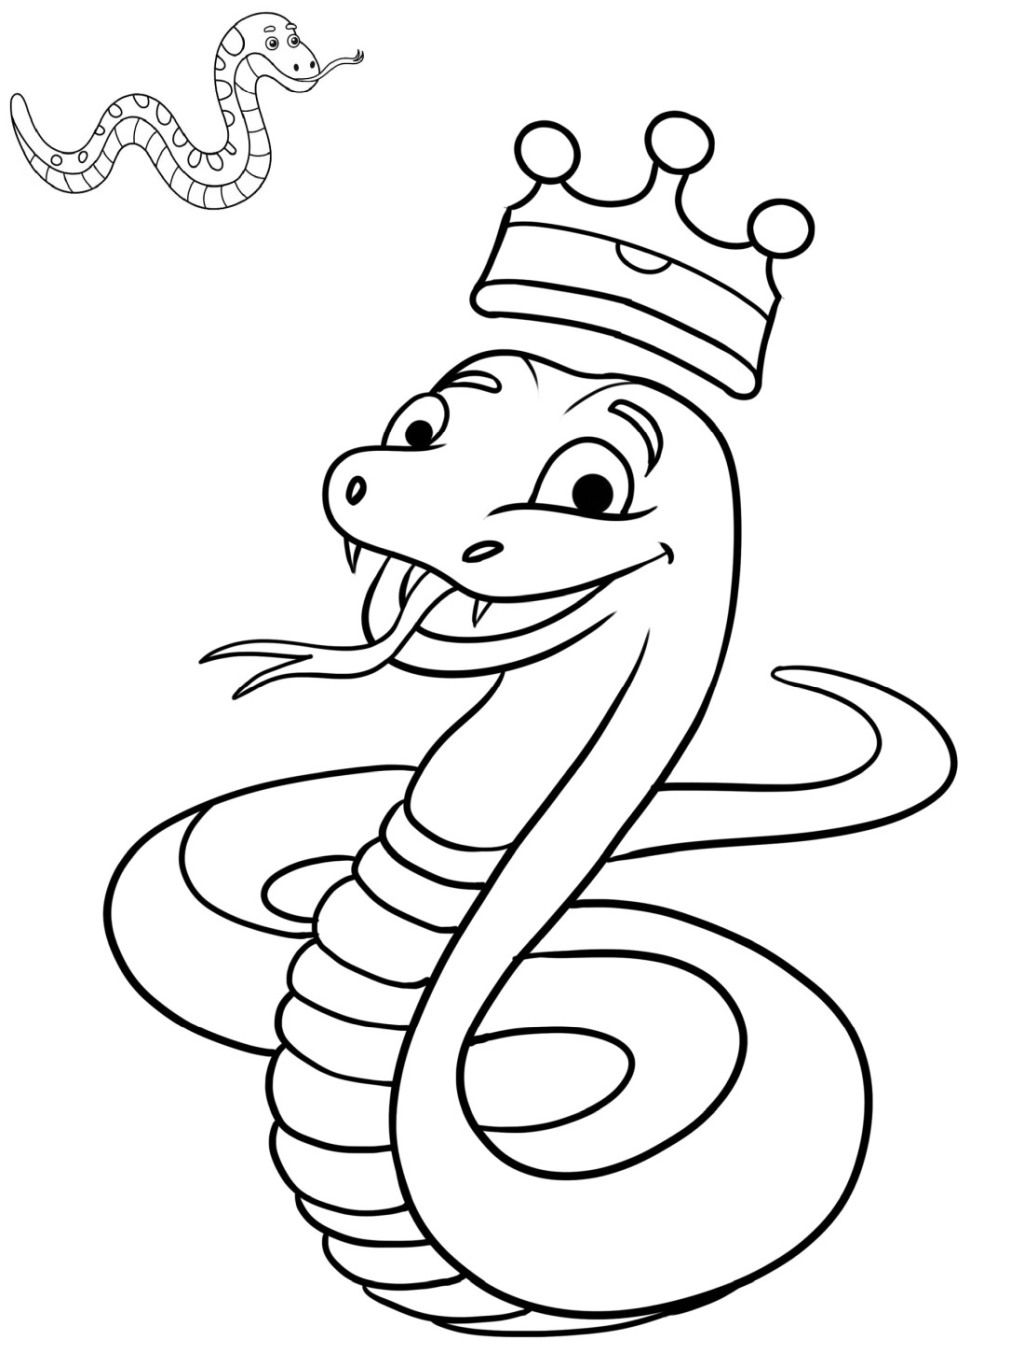 Snake princess coloring